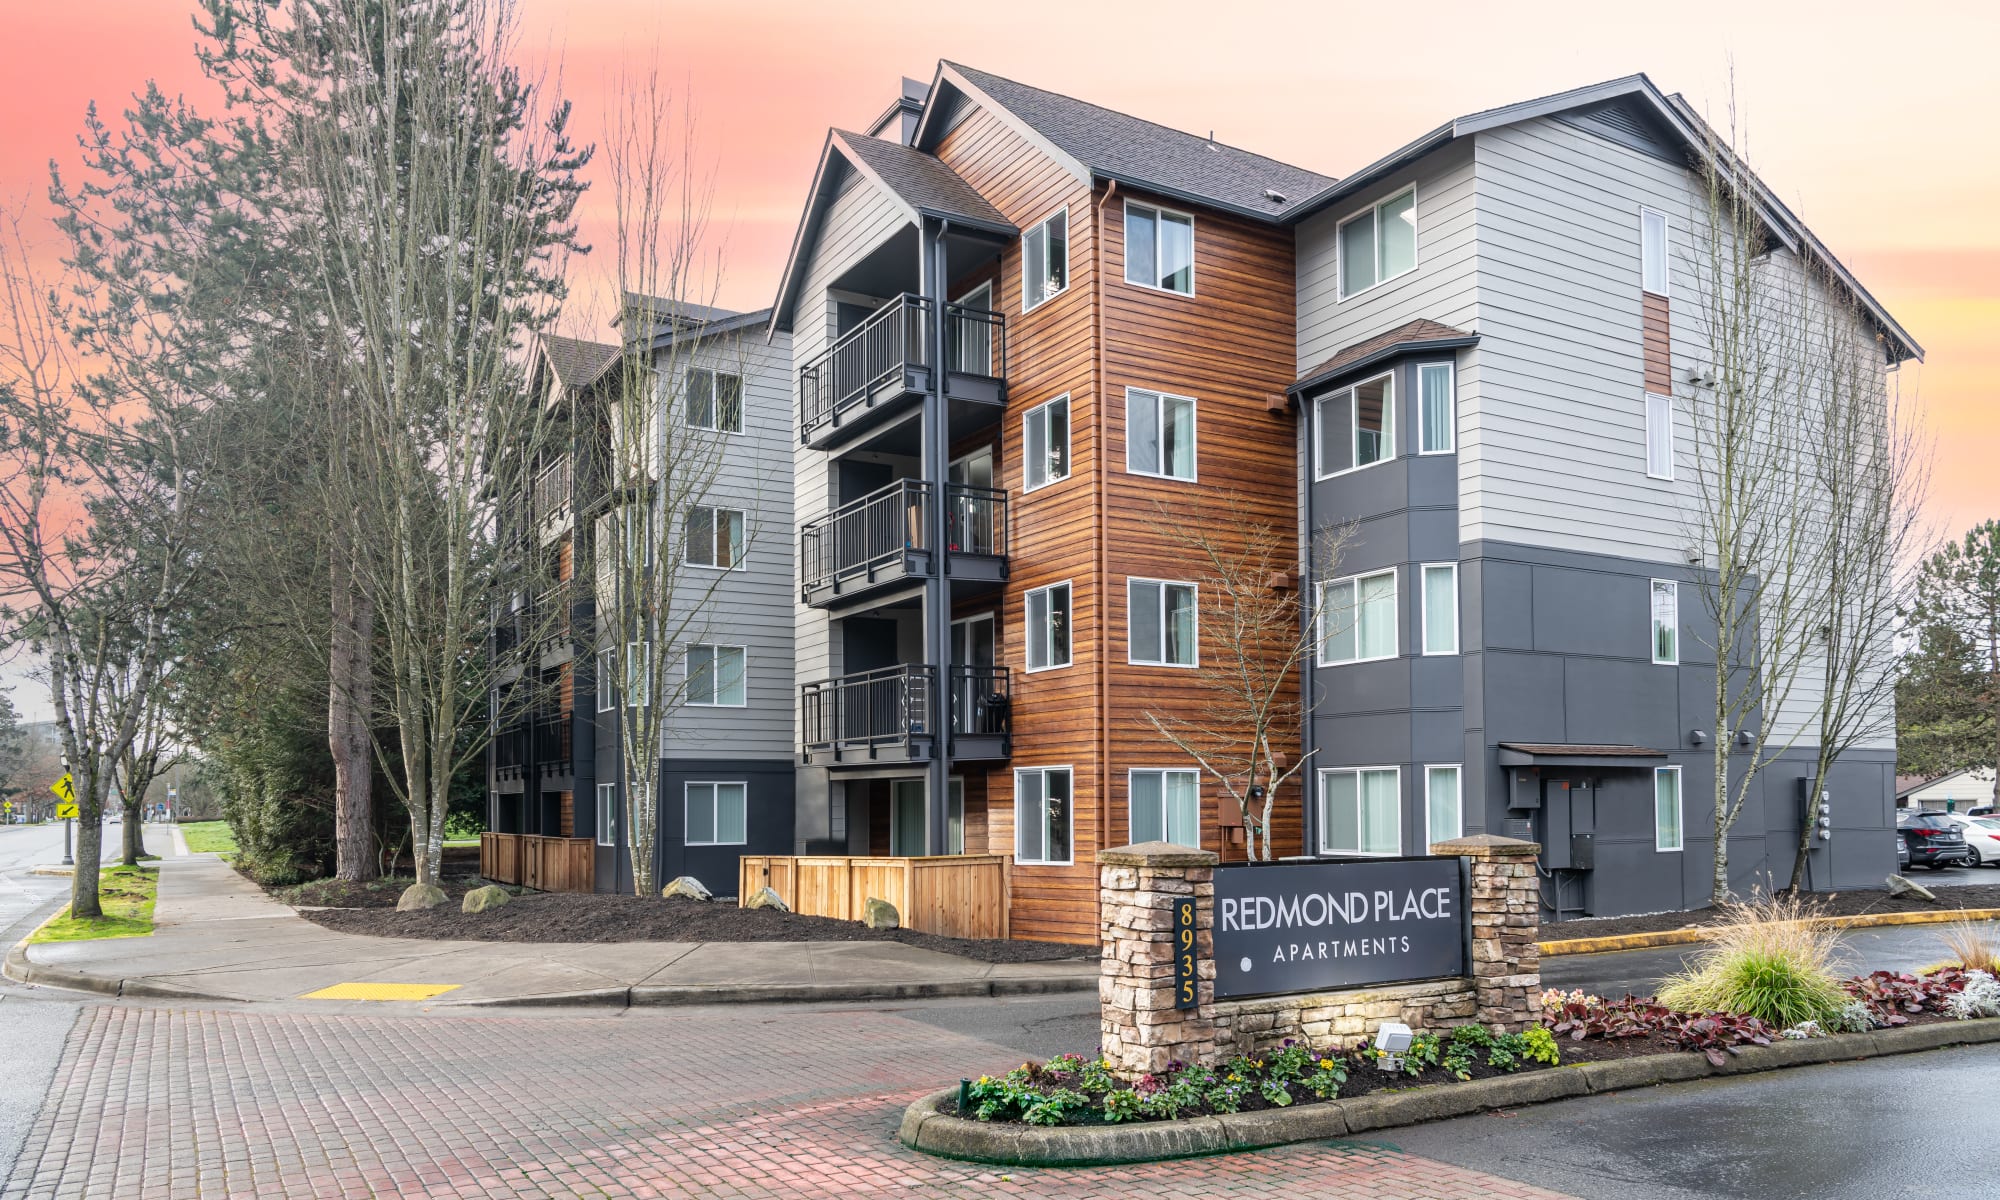 Apartments at Redmond Place Apartments in Redmond, Washington